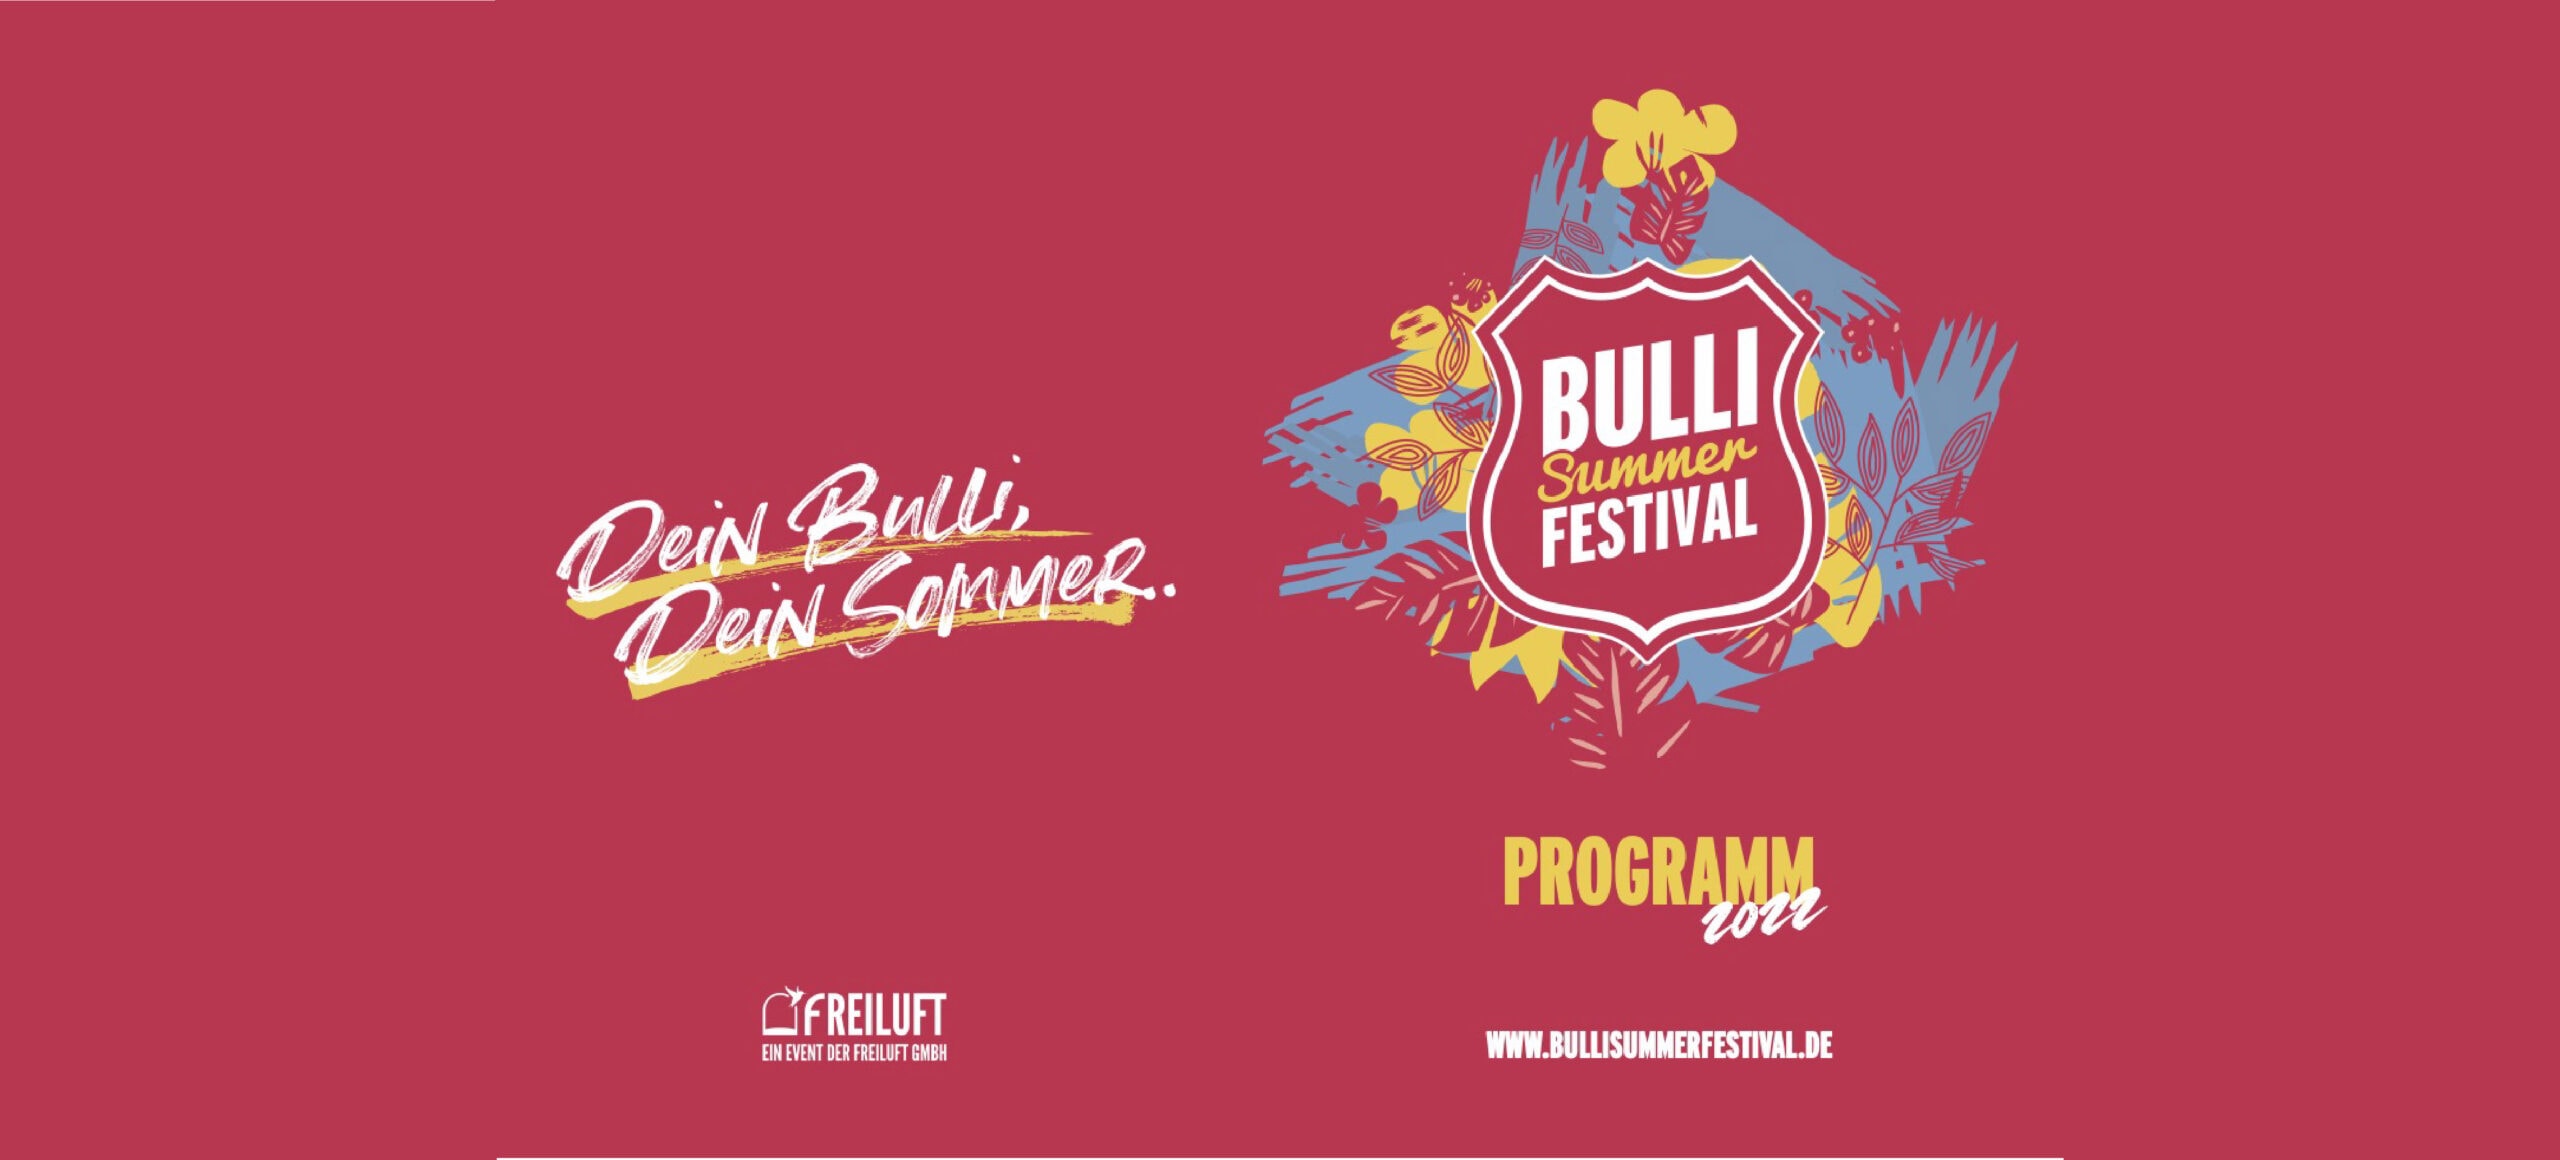 Das Programm zum Bulli Summer Festival 22 steht